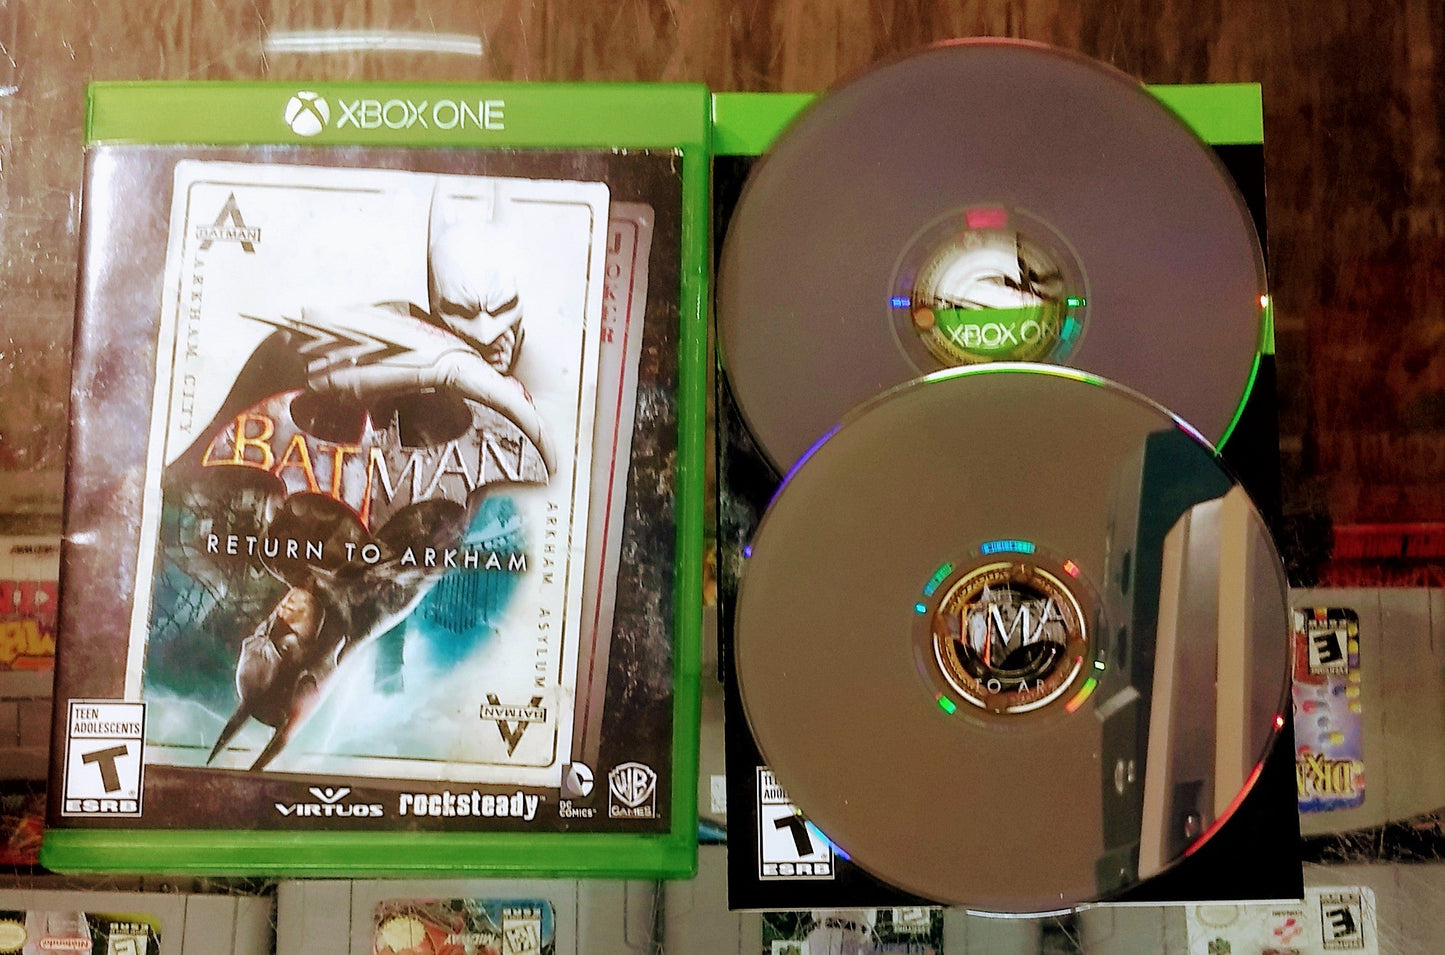 BATMAN RETURN TO ARKHAM XBOX ONE XONE - jeux video game-x